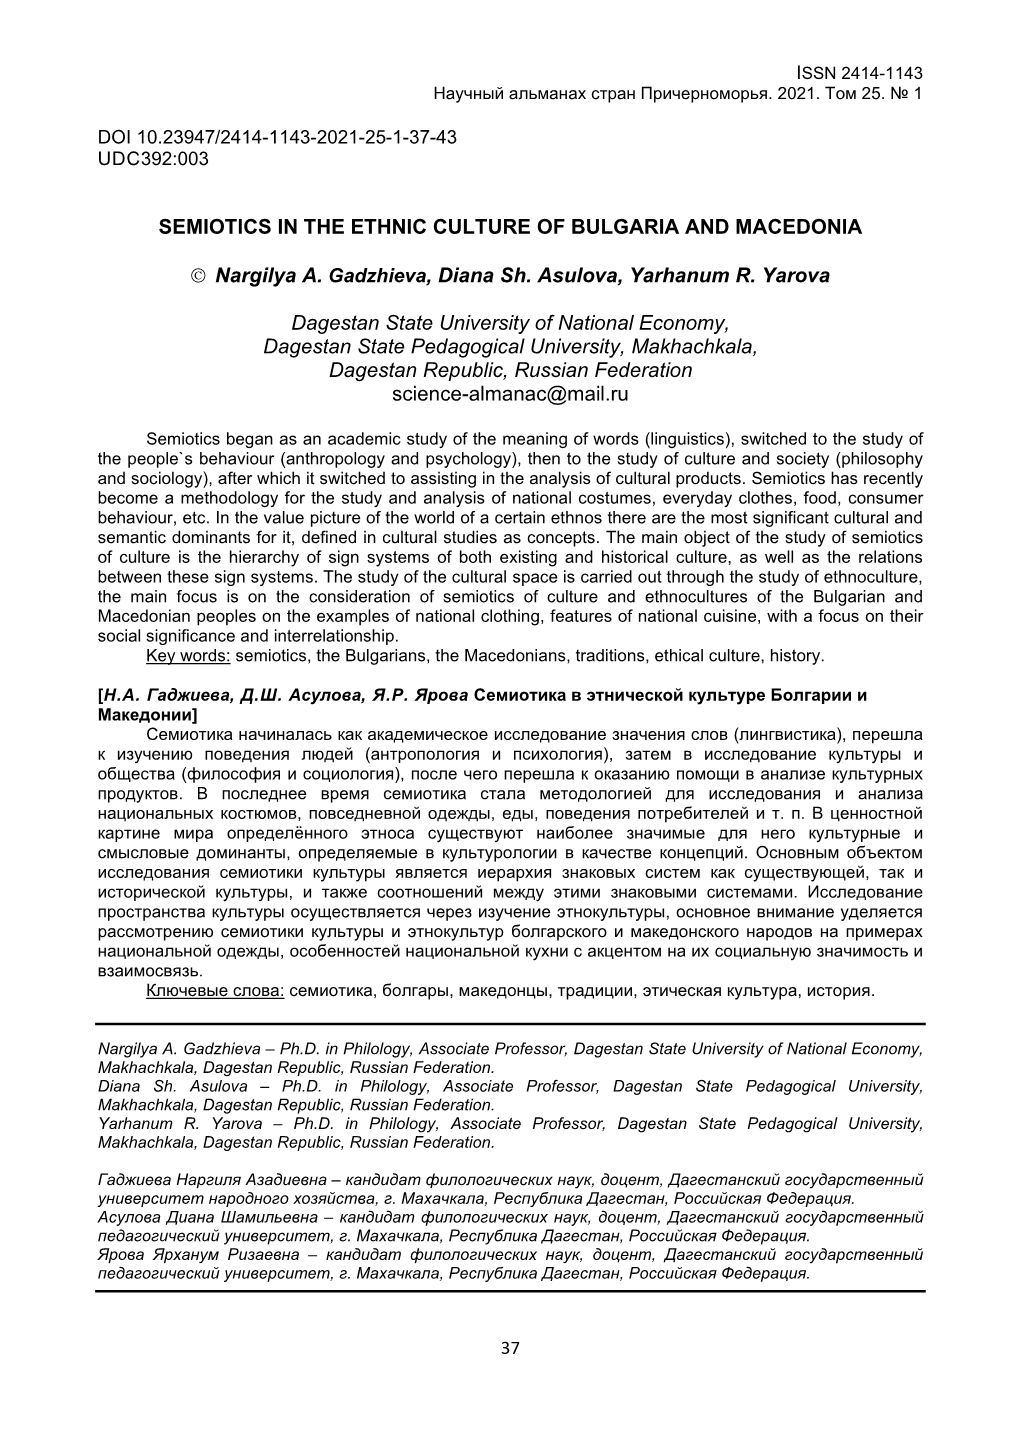 SEMIOTICS in the ETHNIC CULTURE of BULGARIA and MACEDONIA © Nargilya A. Gadzhieva, Diana Sh. Asulova, Yarhanum R. Yarova Dagest